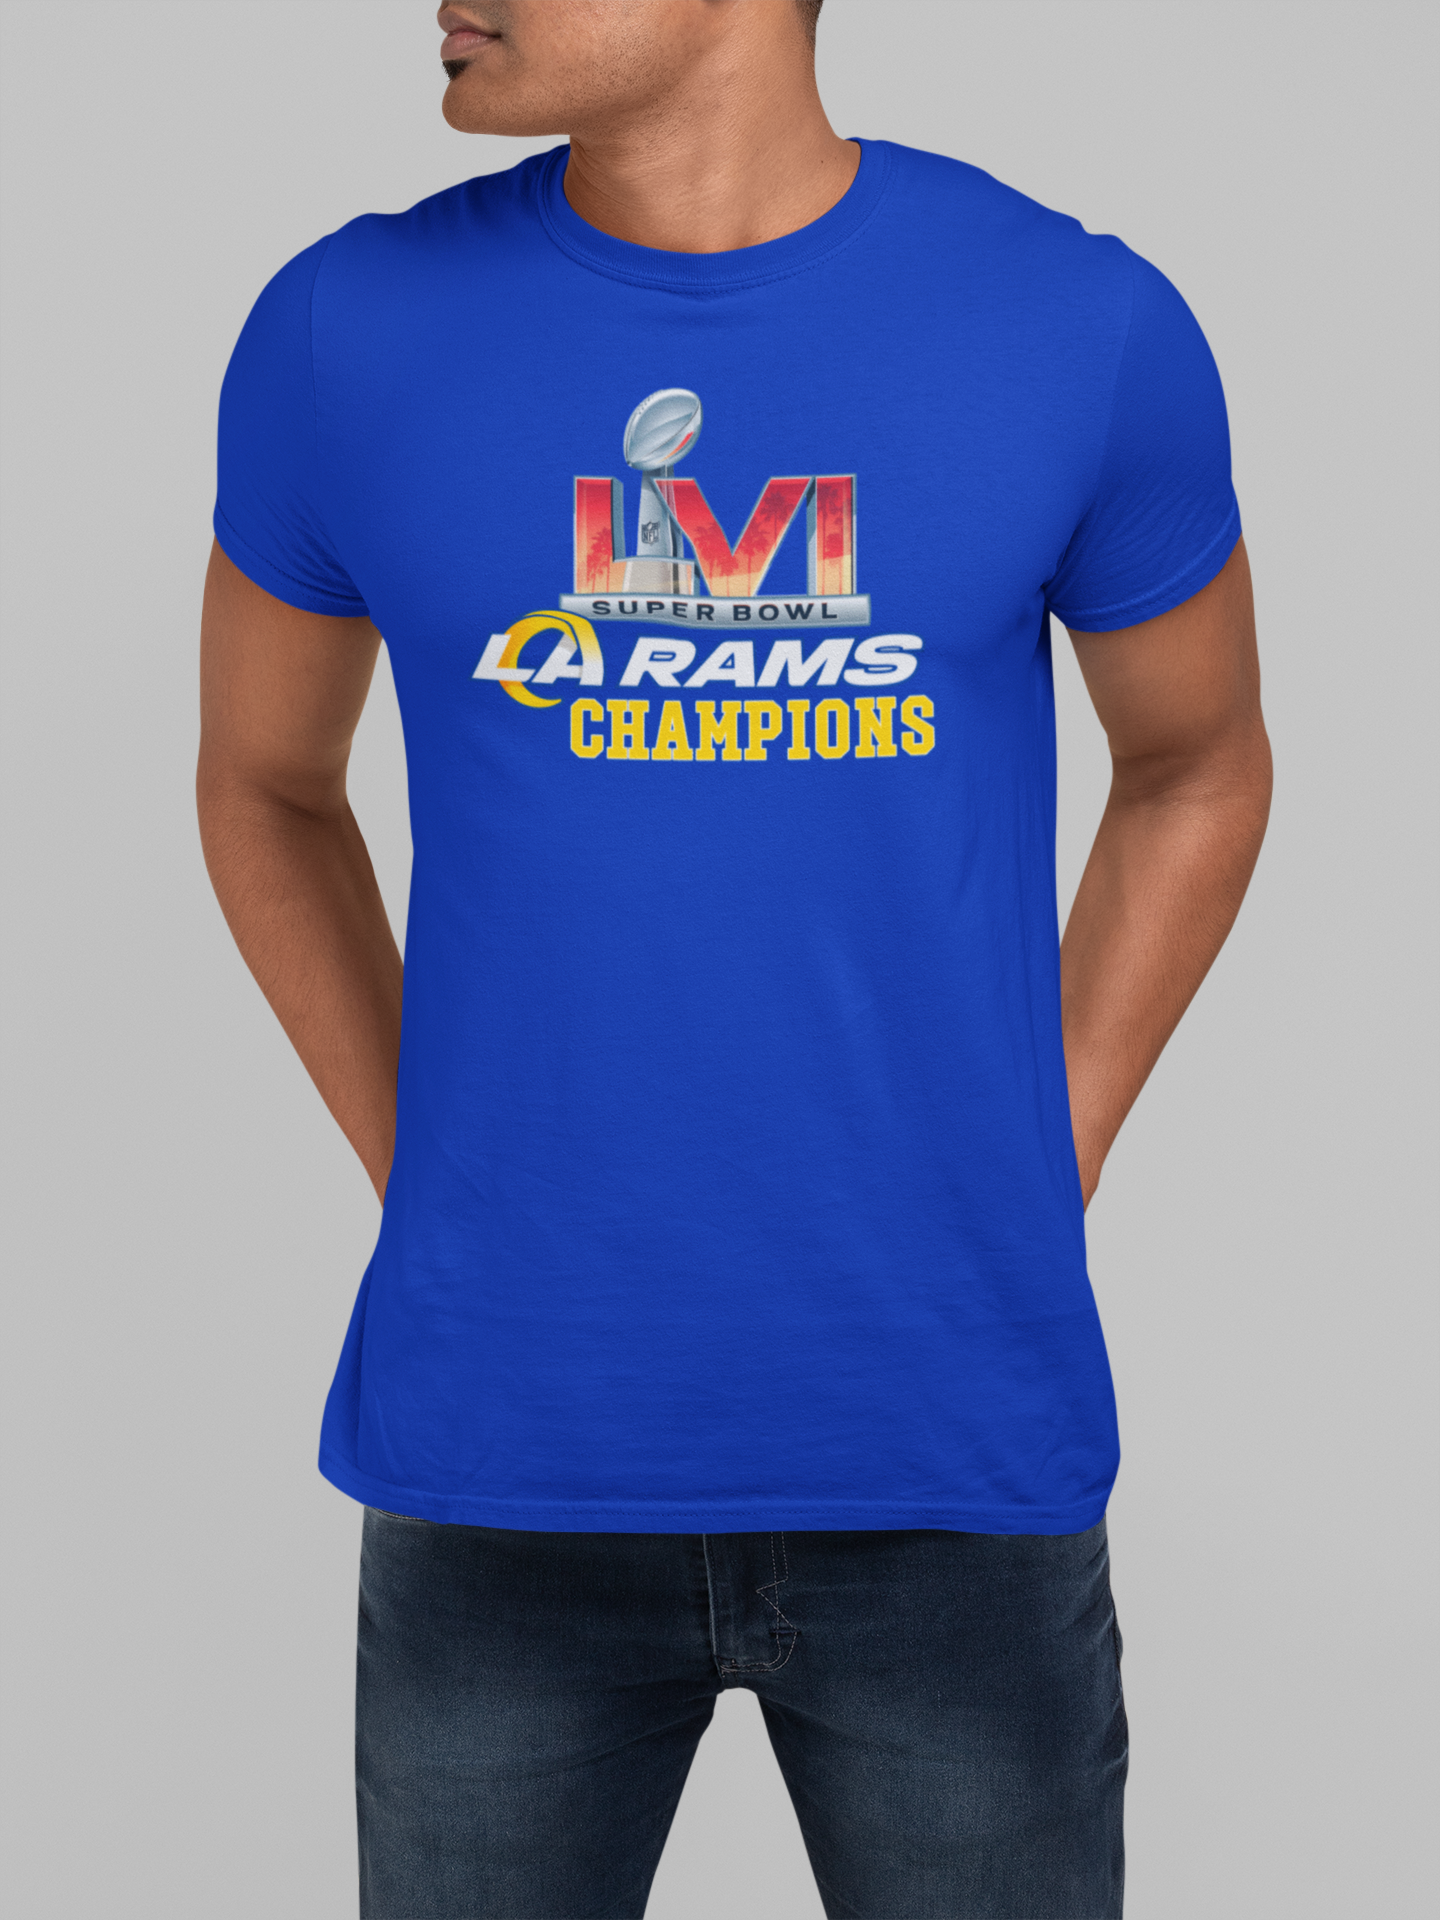 St. Louis Rams Super Bowl Champions Reebok Navy Blue XLarge T-Shirt